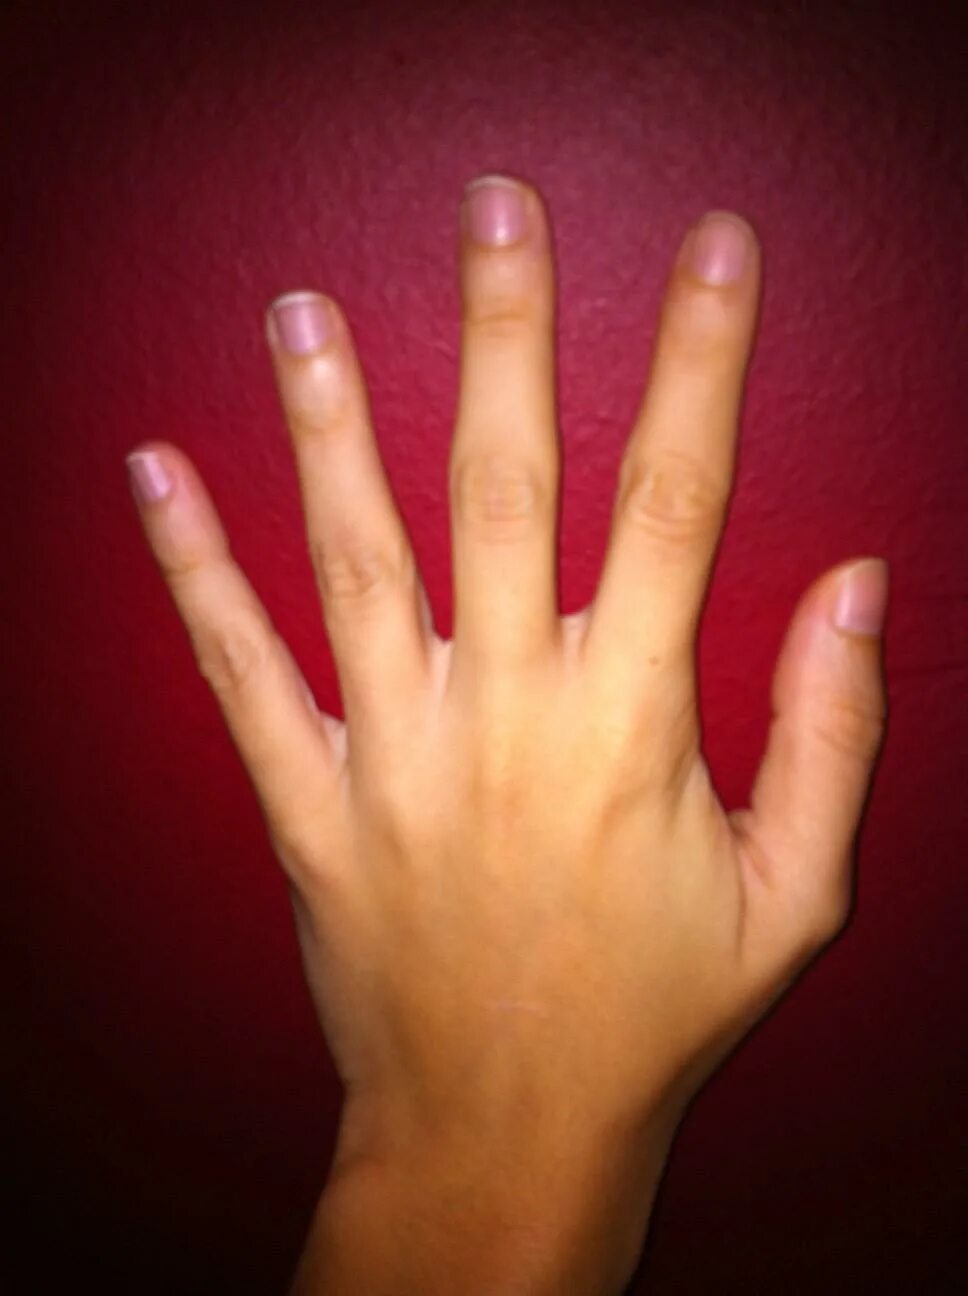 Палец толстый и большой. Квадратные пальцы.